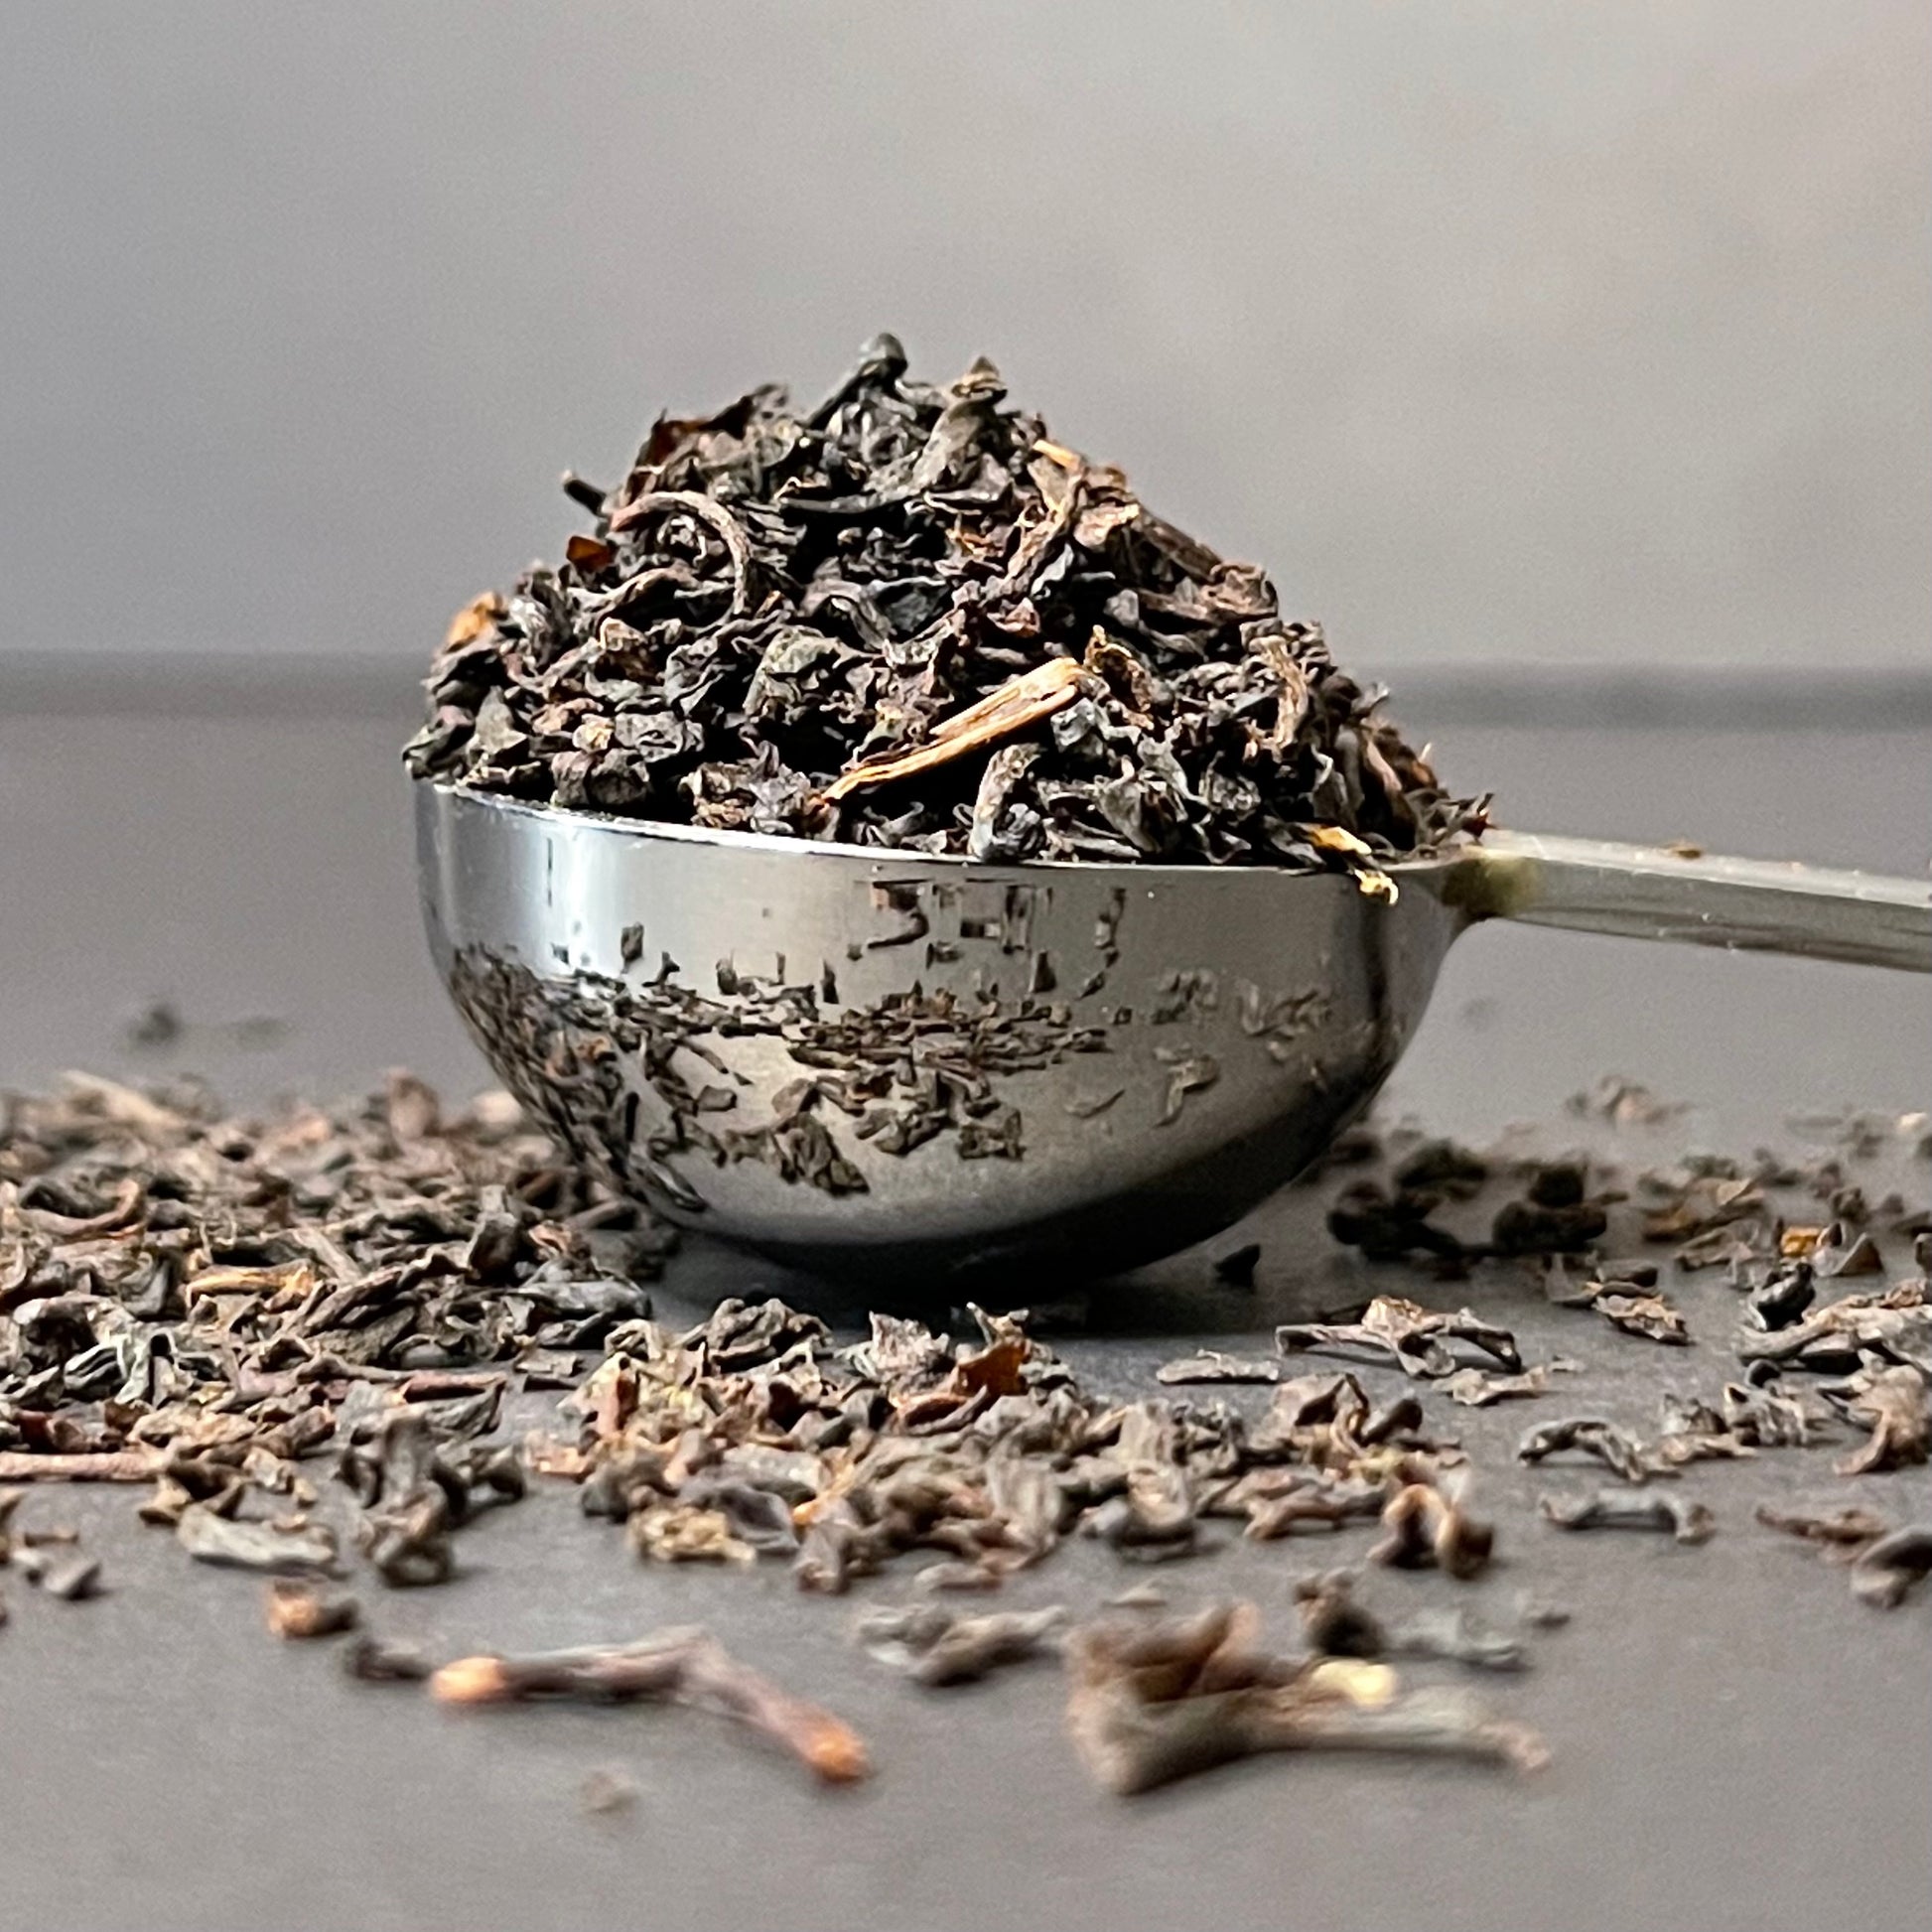 Organic English Breakfast Loose Leaf Tea Blend | The Cove Tea Company | Spruce Grove AB Canada